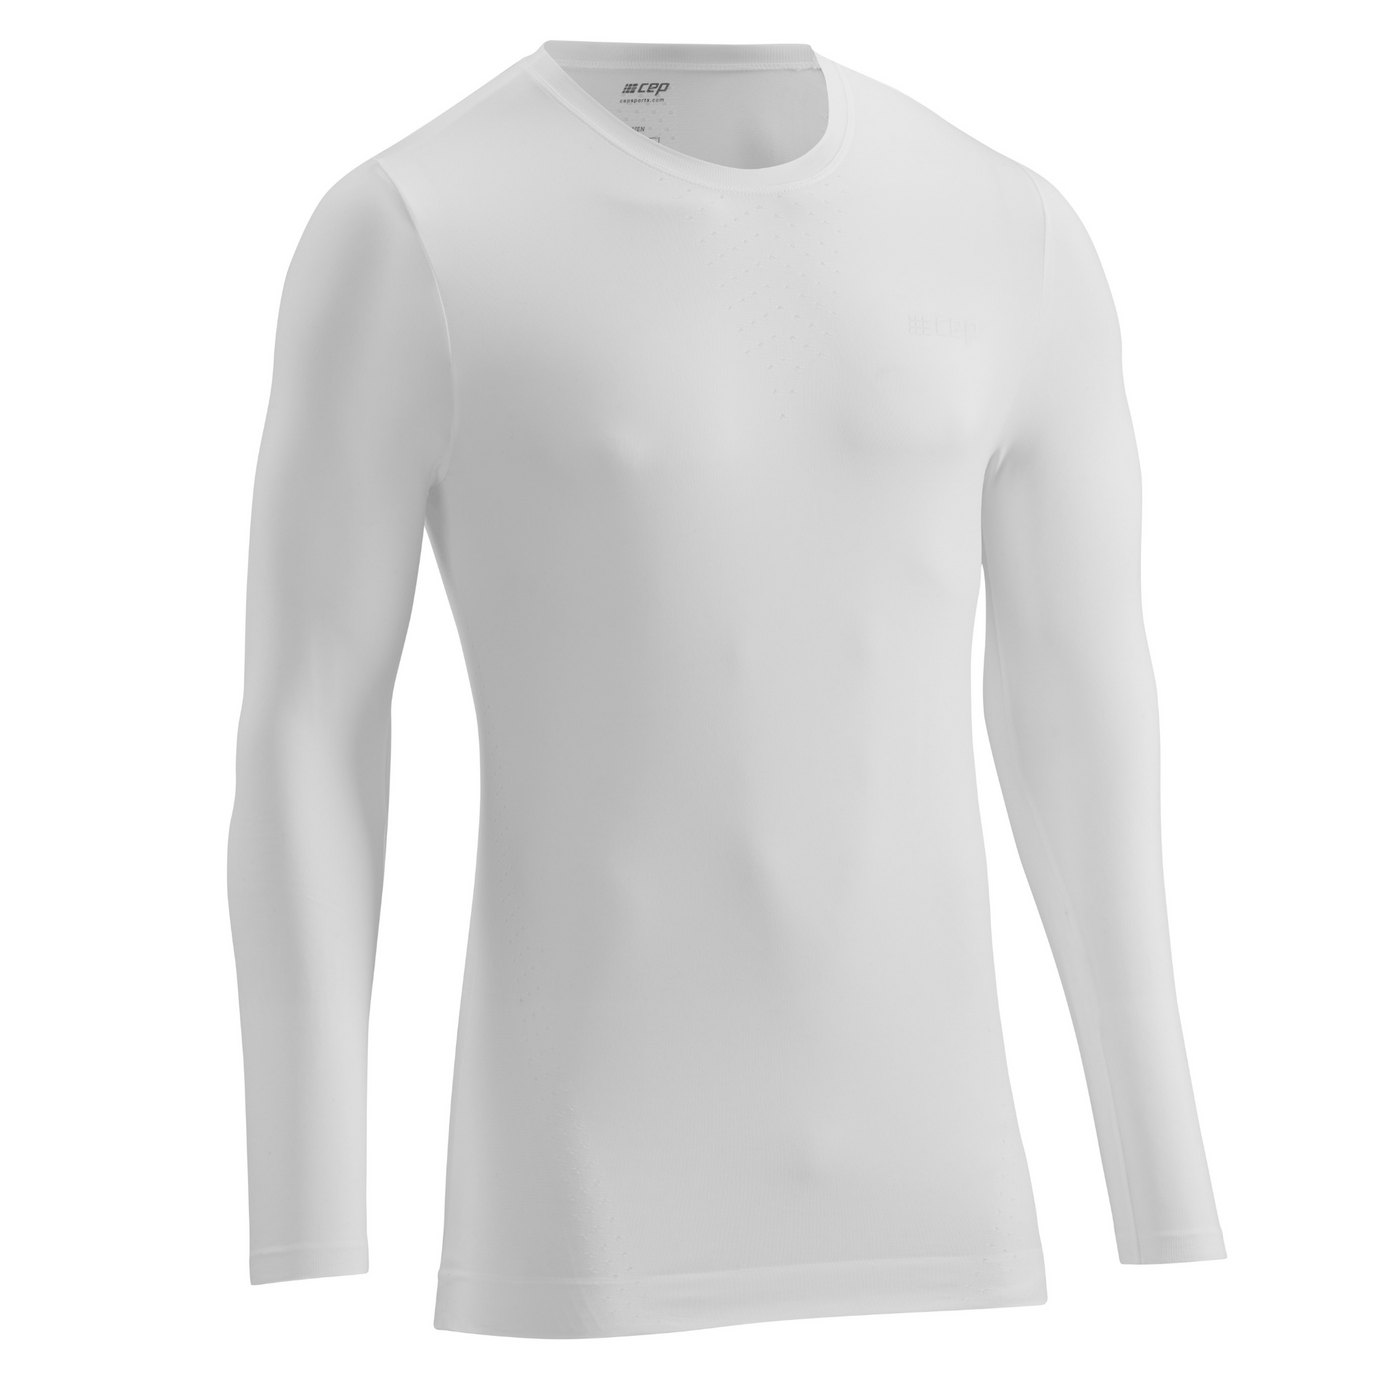 Ultralight Long Sleeve Shirt, Men, White, Front View